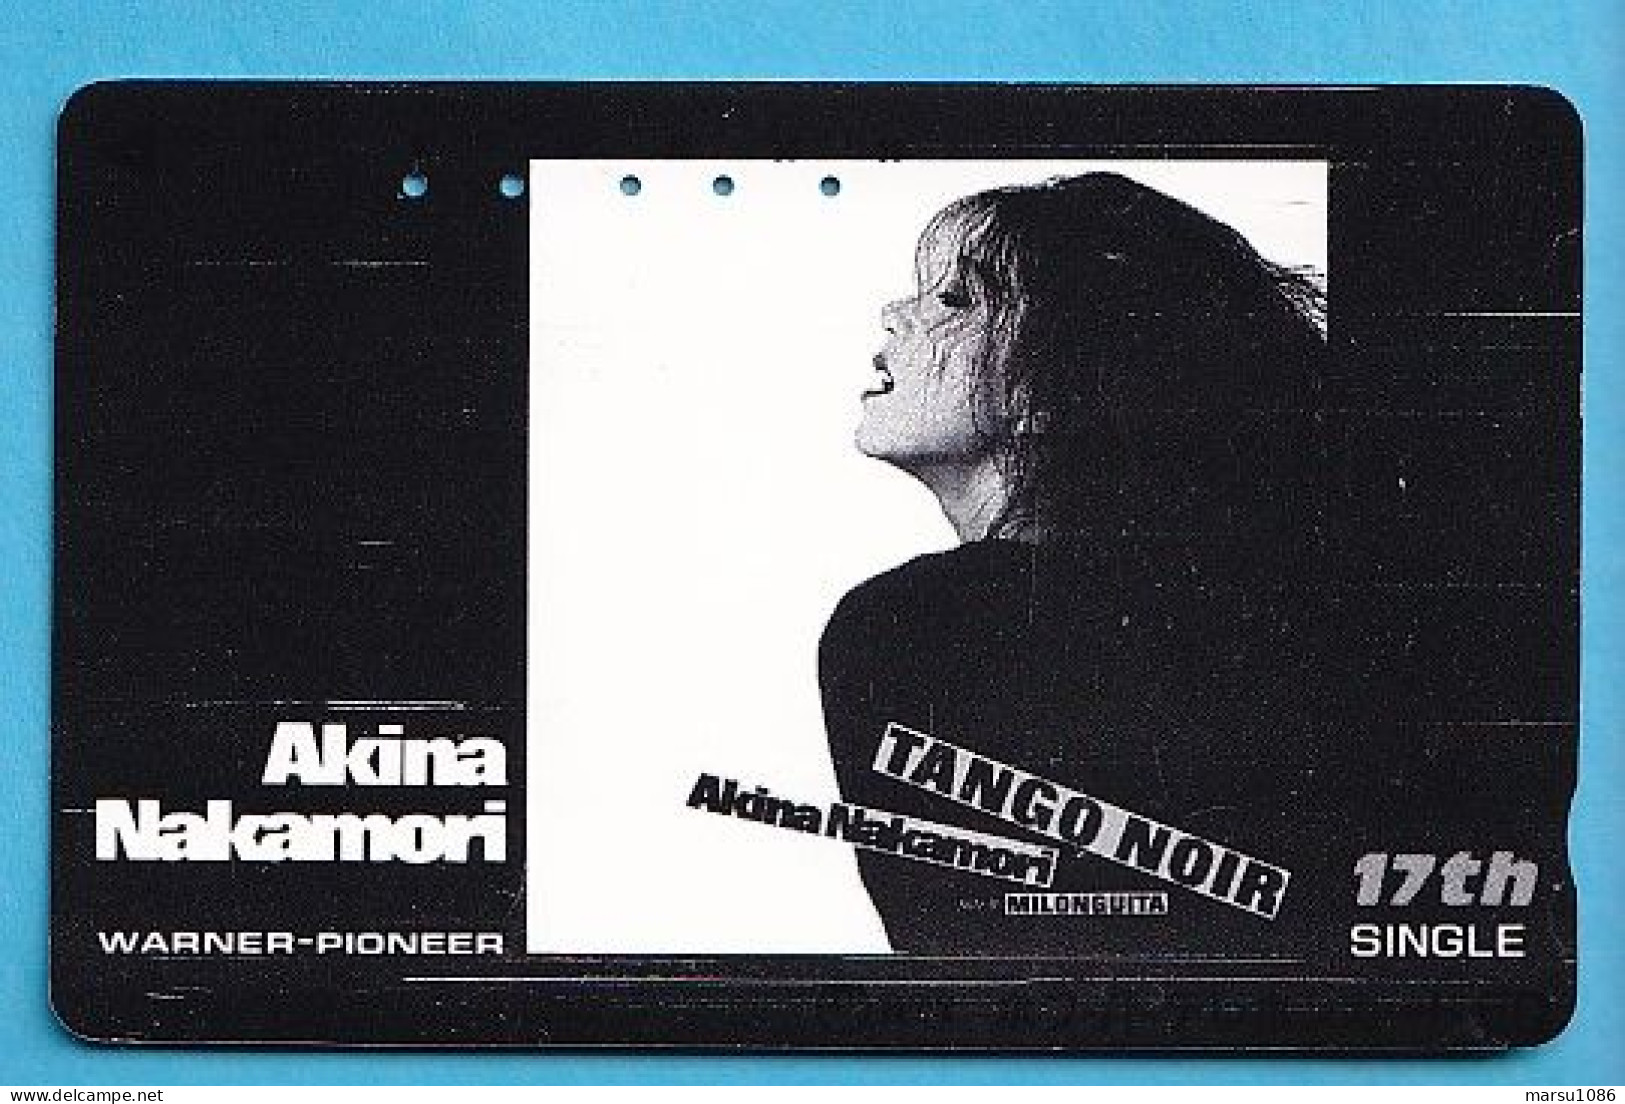 Japan Telefonkarte Japon Télécarte Phonecard -  Girl Frau Women Femme Akina Nakamori - Personnages